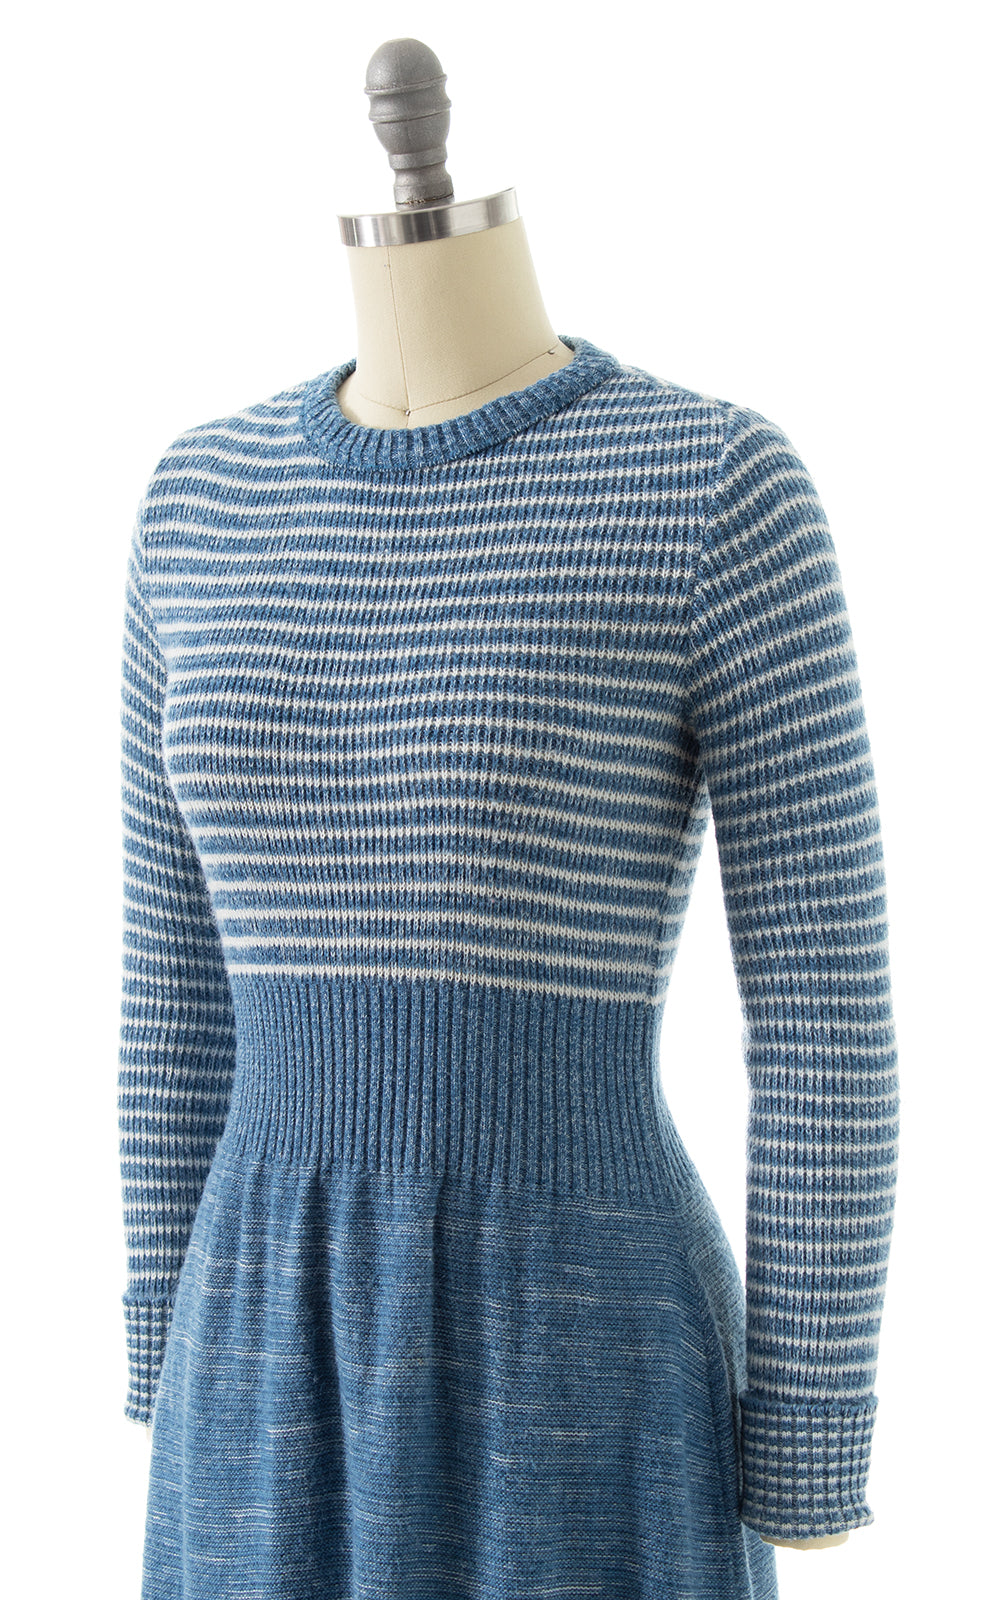 1970s Knit Sweater Dress | x-small/small